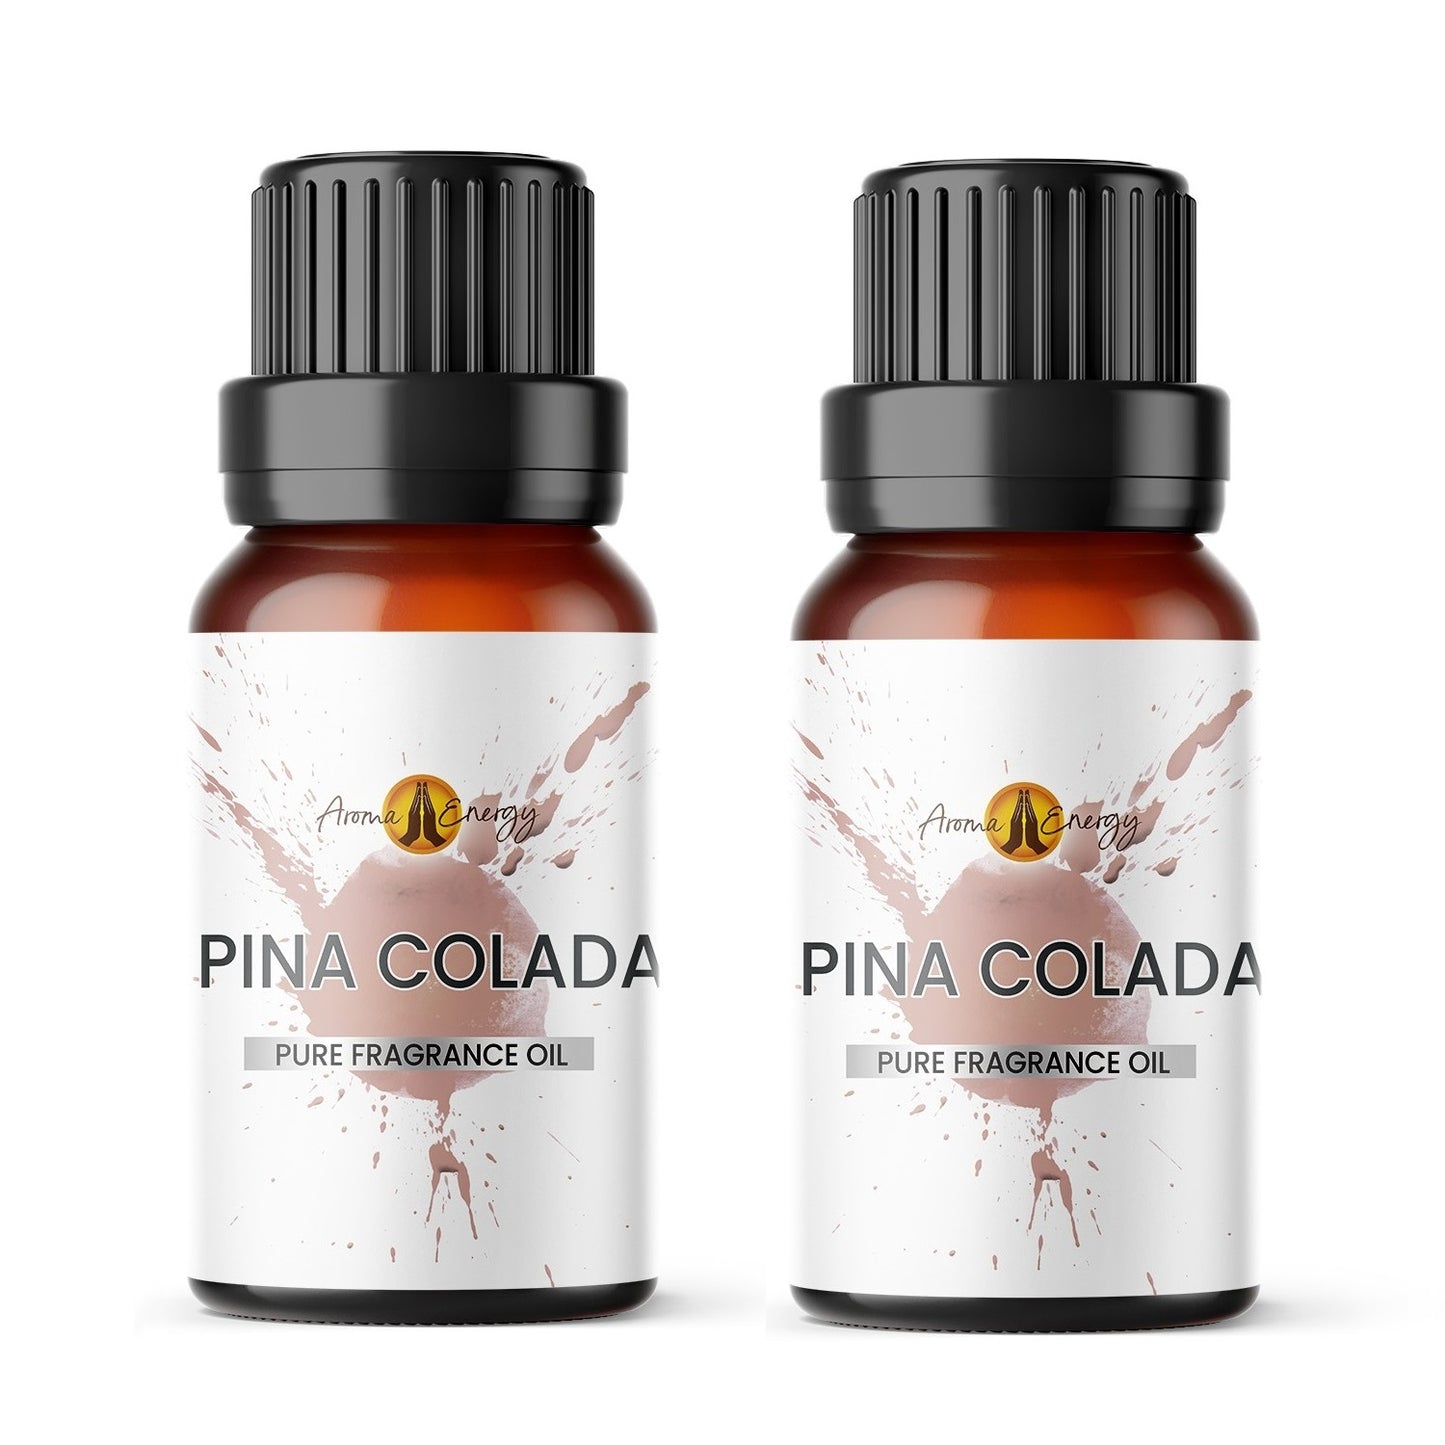 Pina colada Fragrance Oil - Aroma Energy